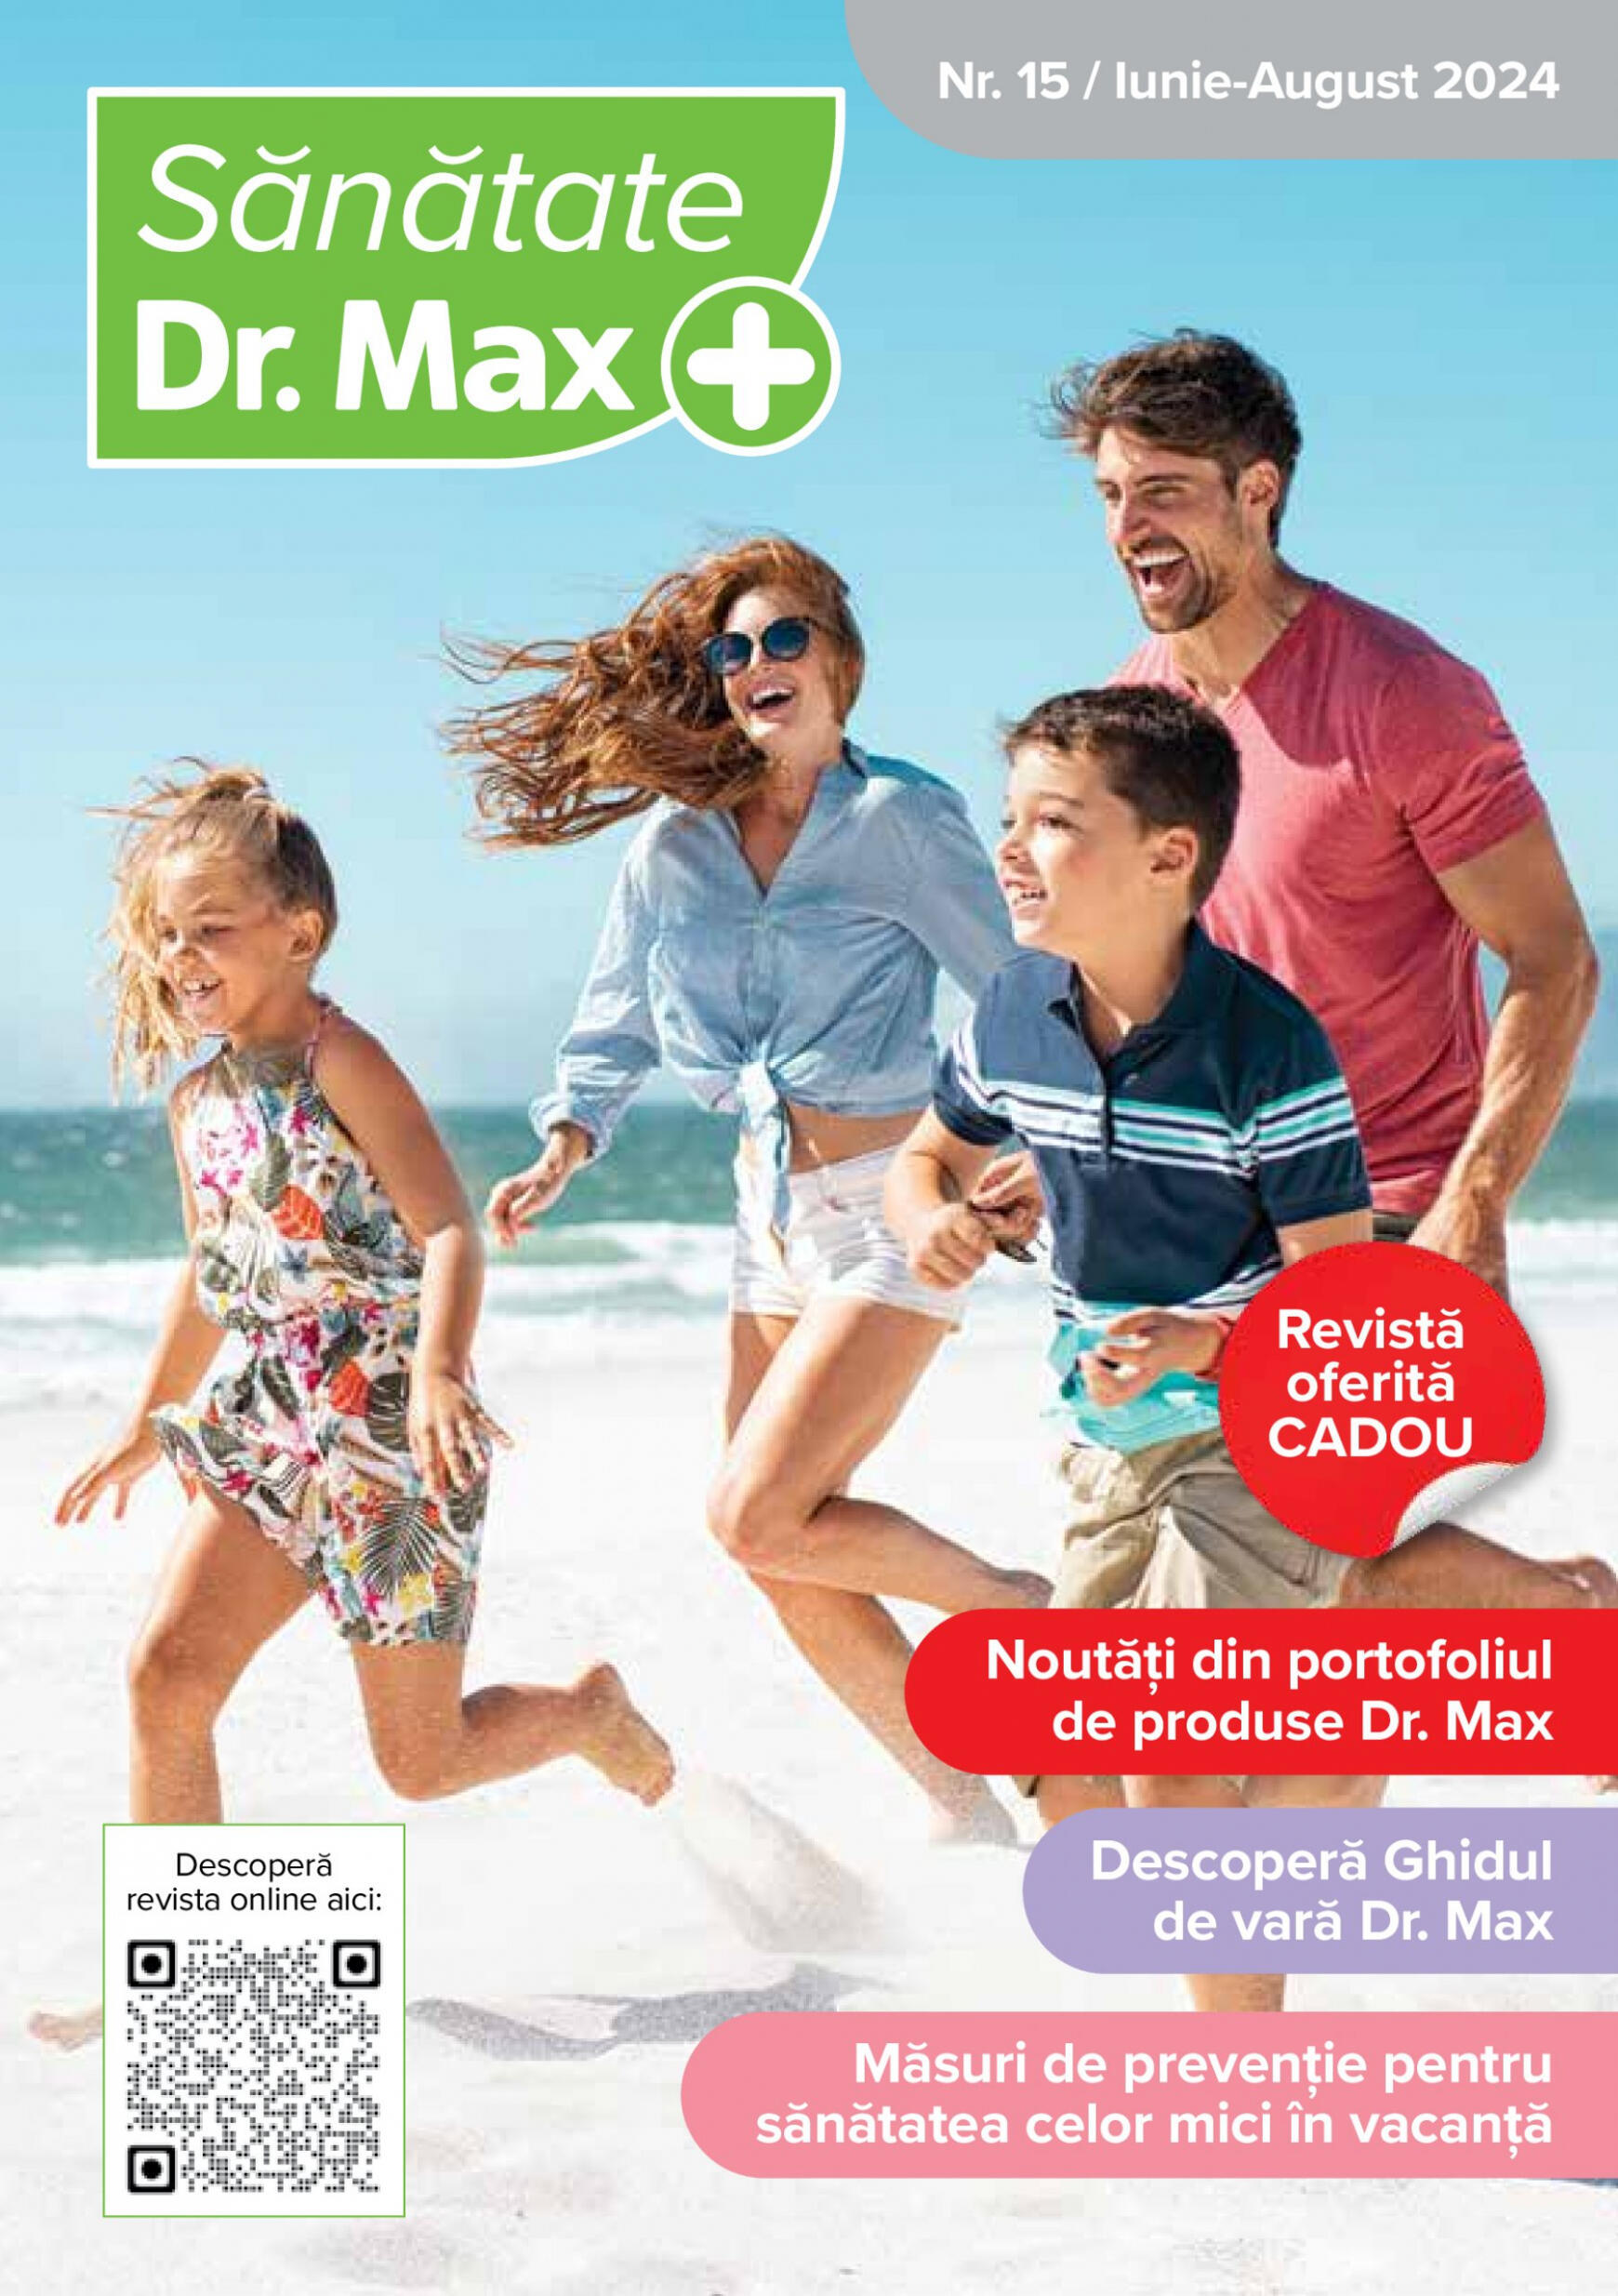 dr-max - Catalog nou Dr. Max - Sănătate 01.06. - 31.08.